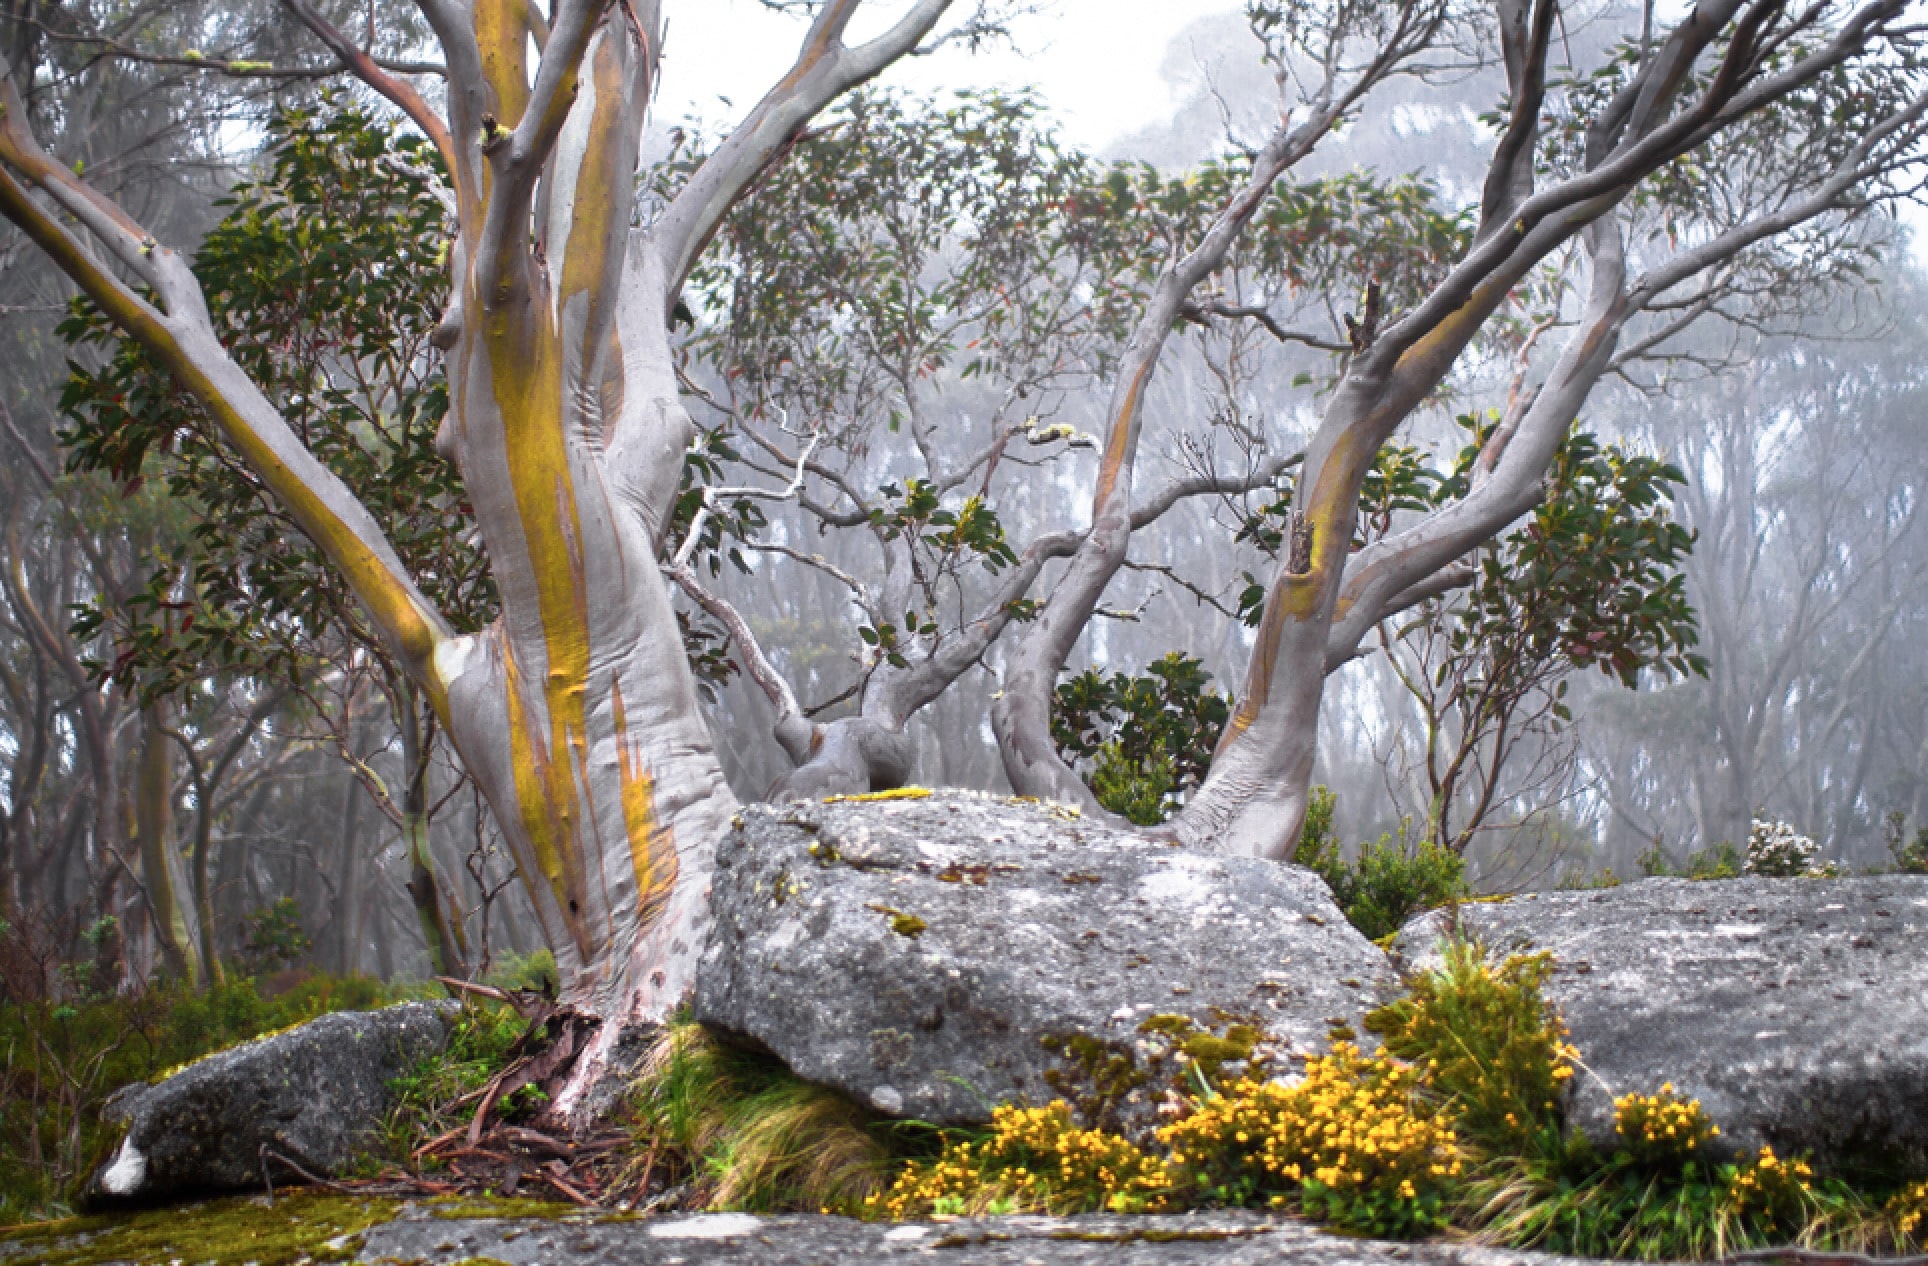 Snow Gum (Eucalyptus pauciflora) growing alone, surrounded by fog